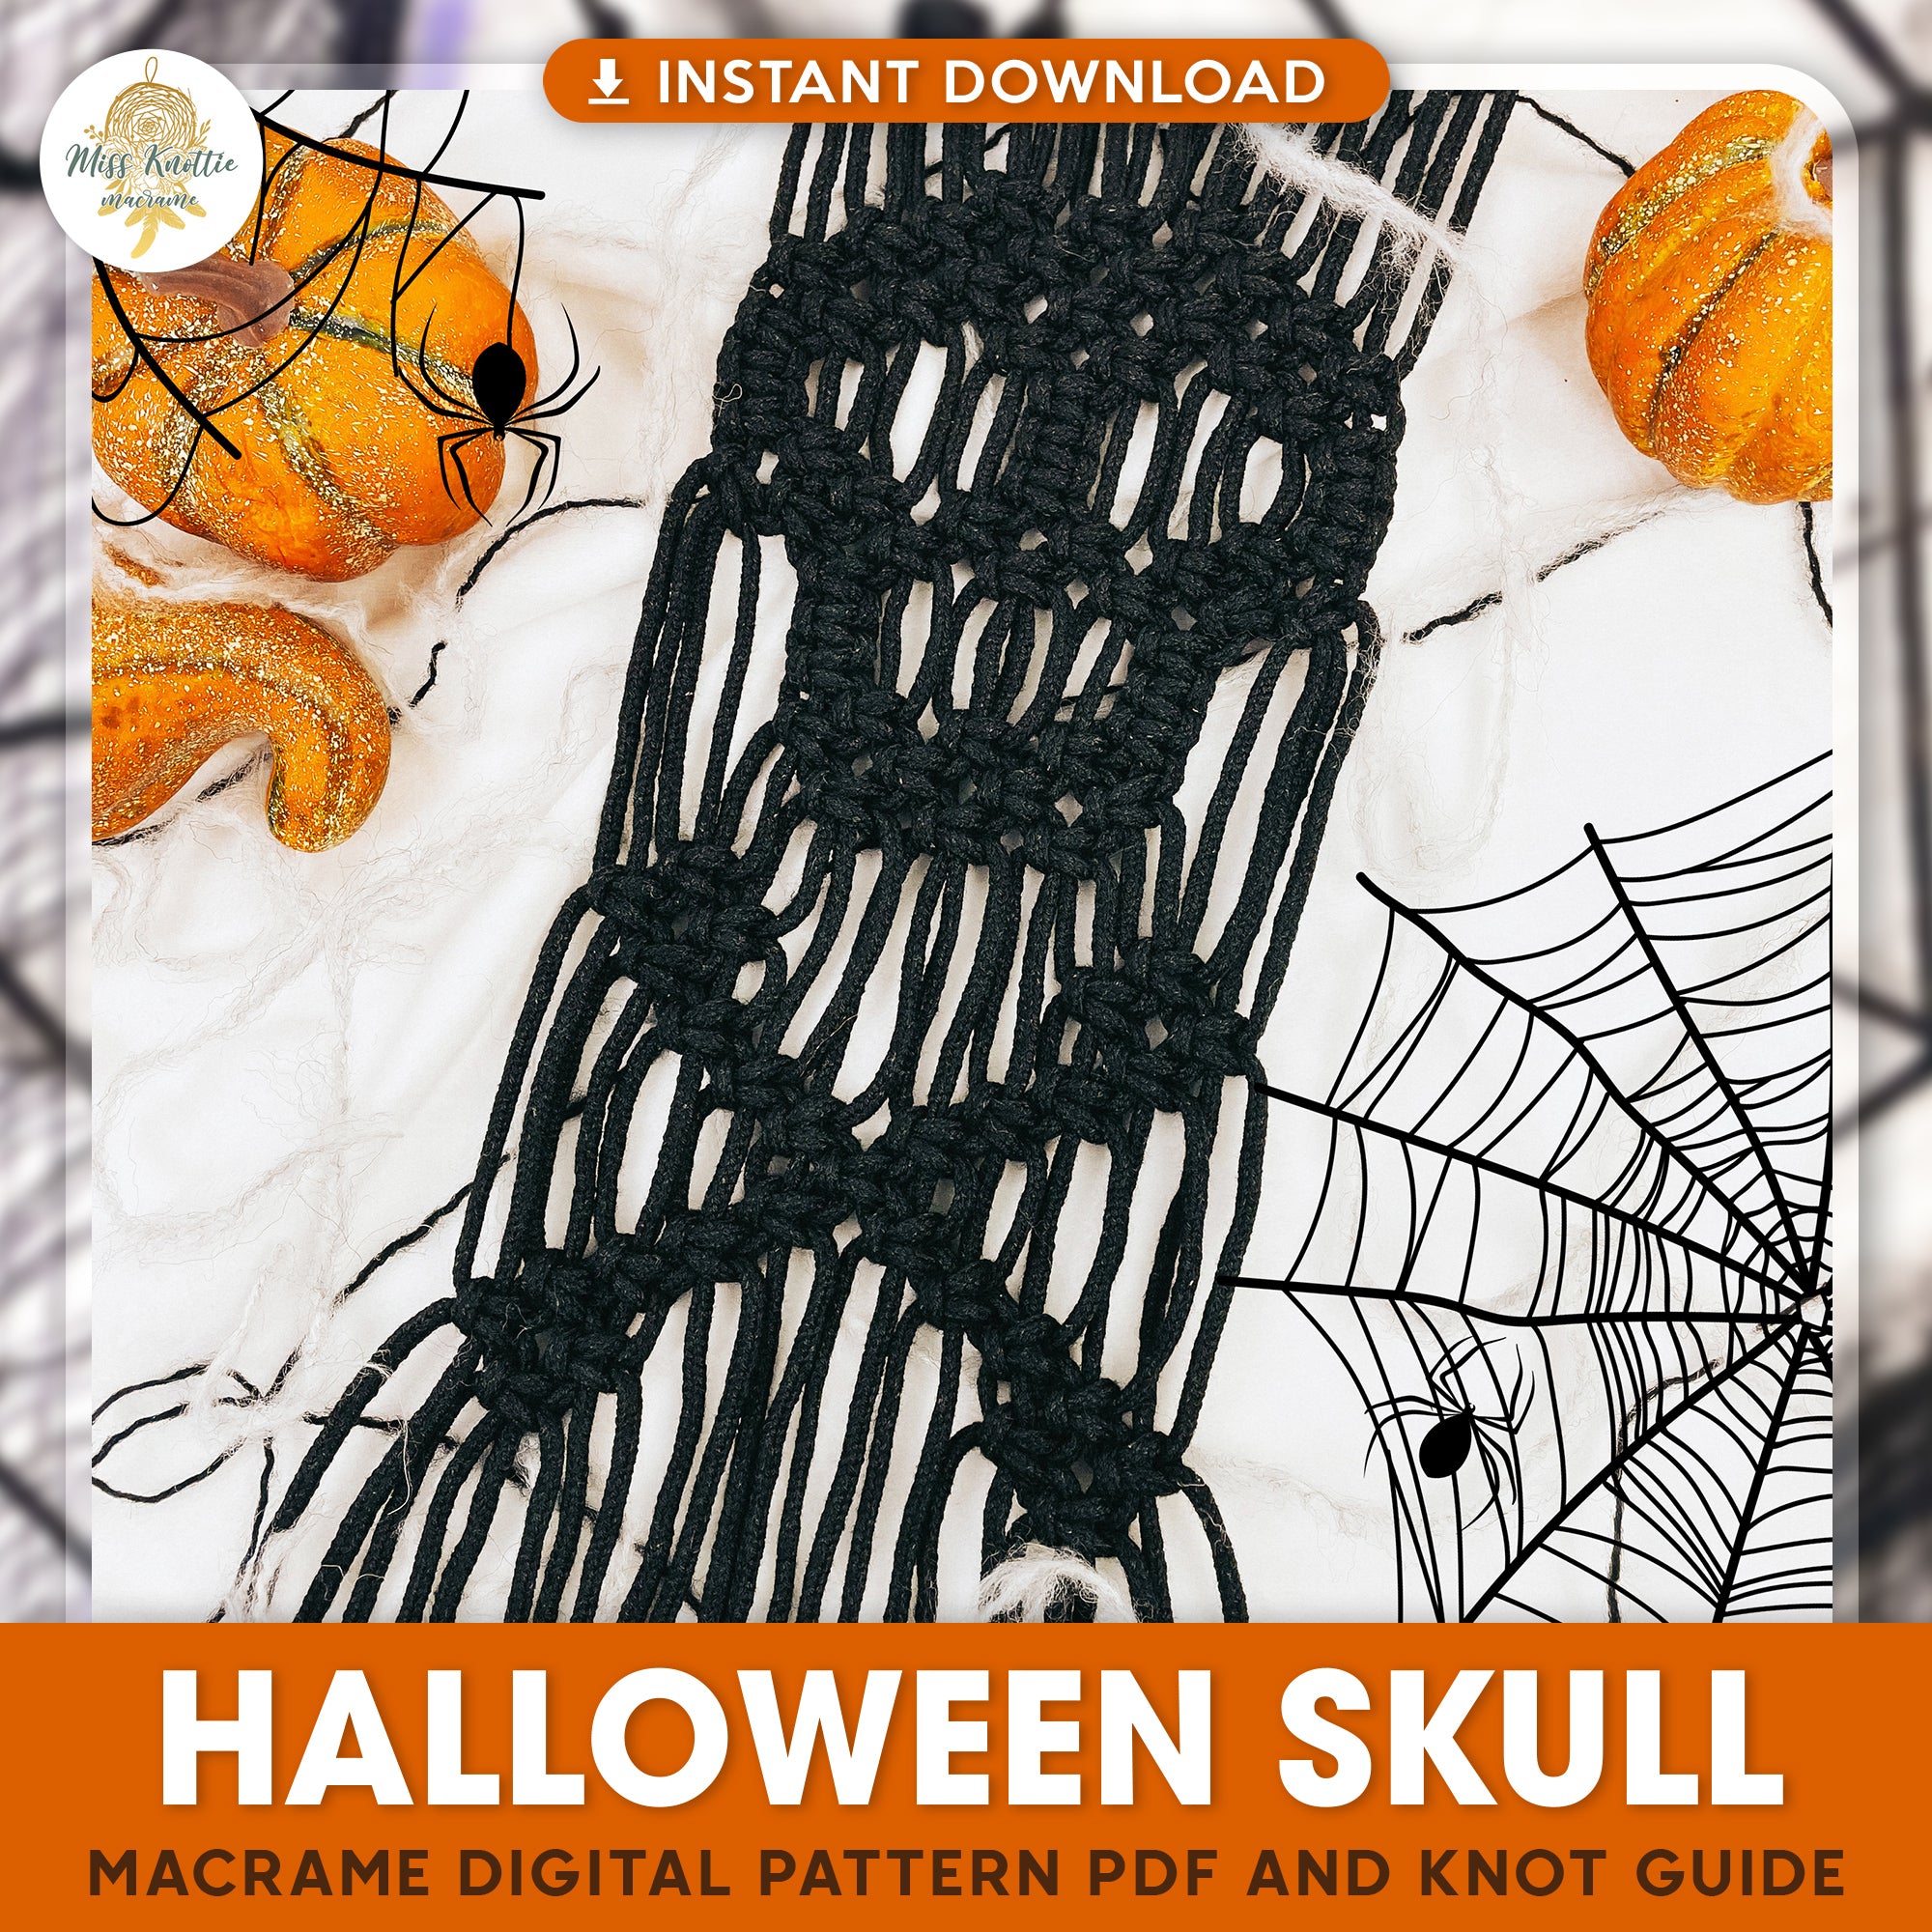 Halloween Skull Pattern - Written PDF And Knot Guide